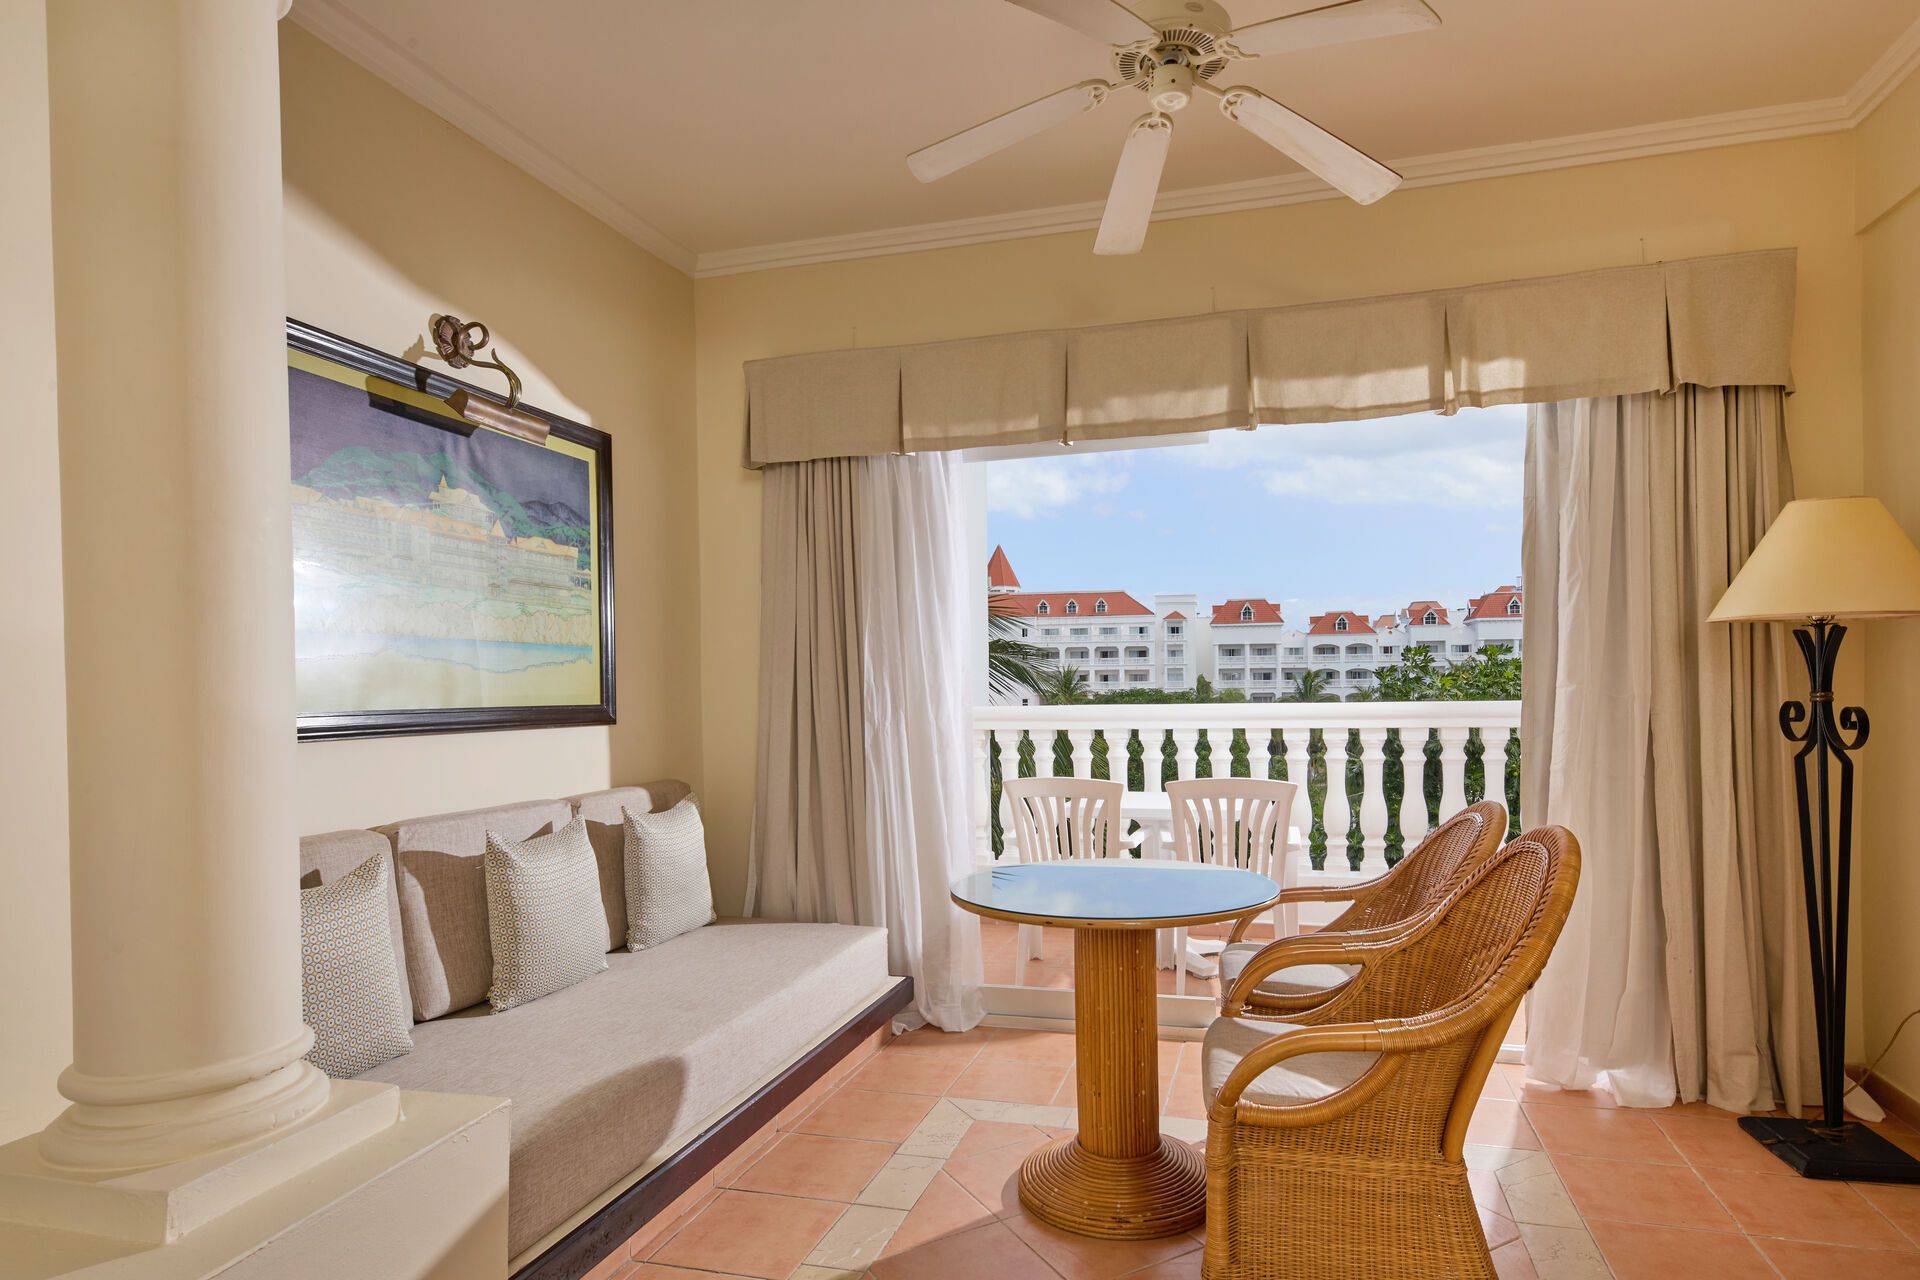 Jamaïque - Hotel Bahia Principe Grand Jamaica 5*